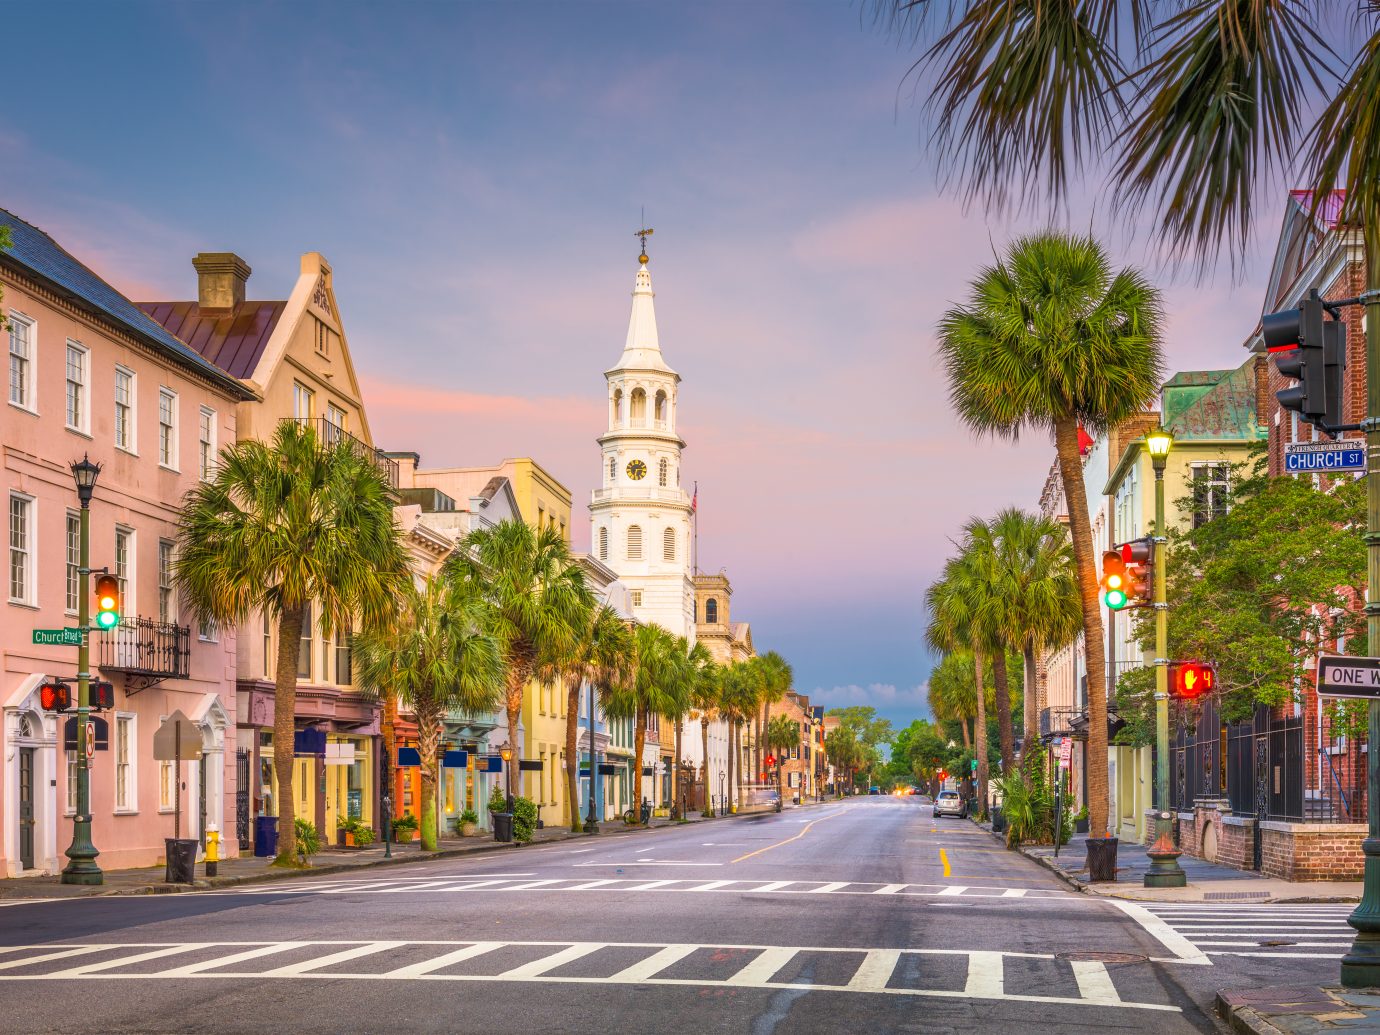 Charleston, South Carolina, USA cityscape in the historic French Quarter.